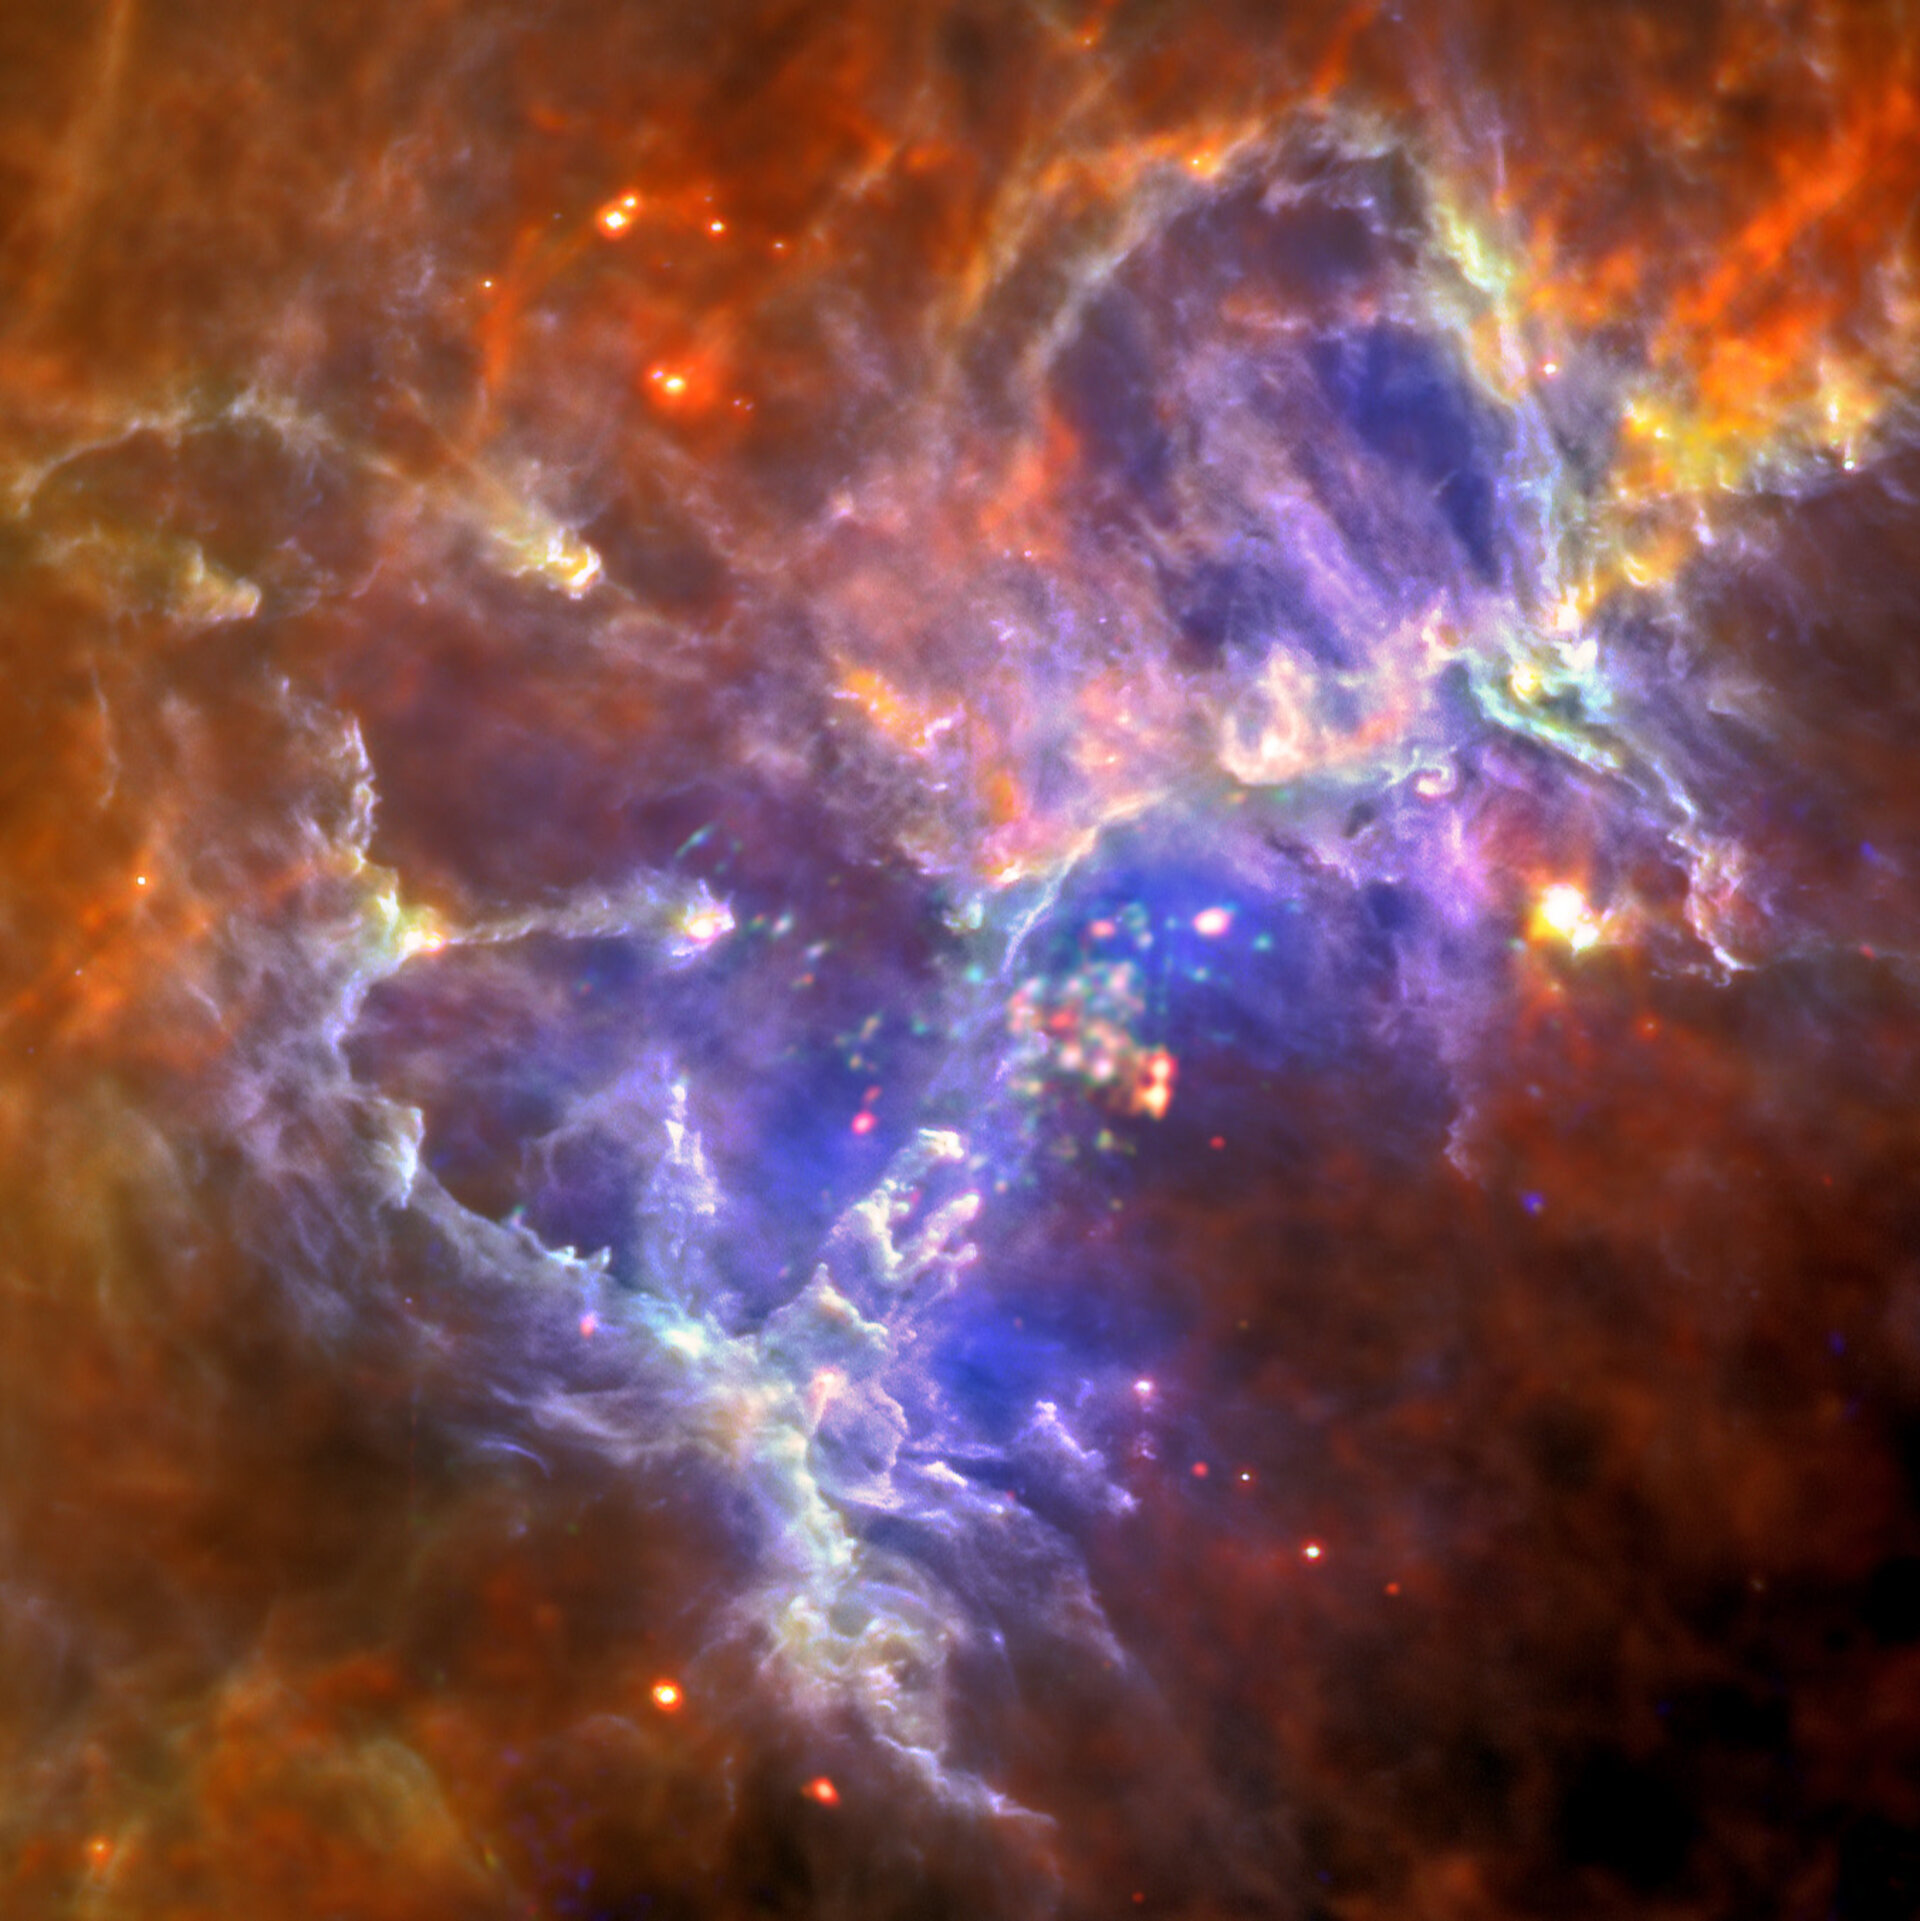 Stunning new Herschel and XMM-Newton image of the Eagle Nebula